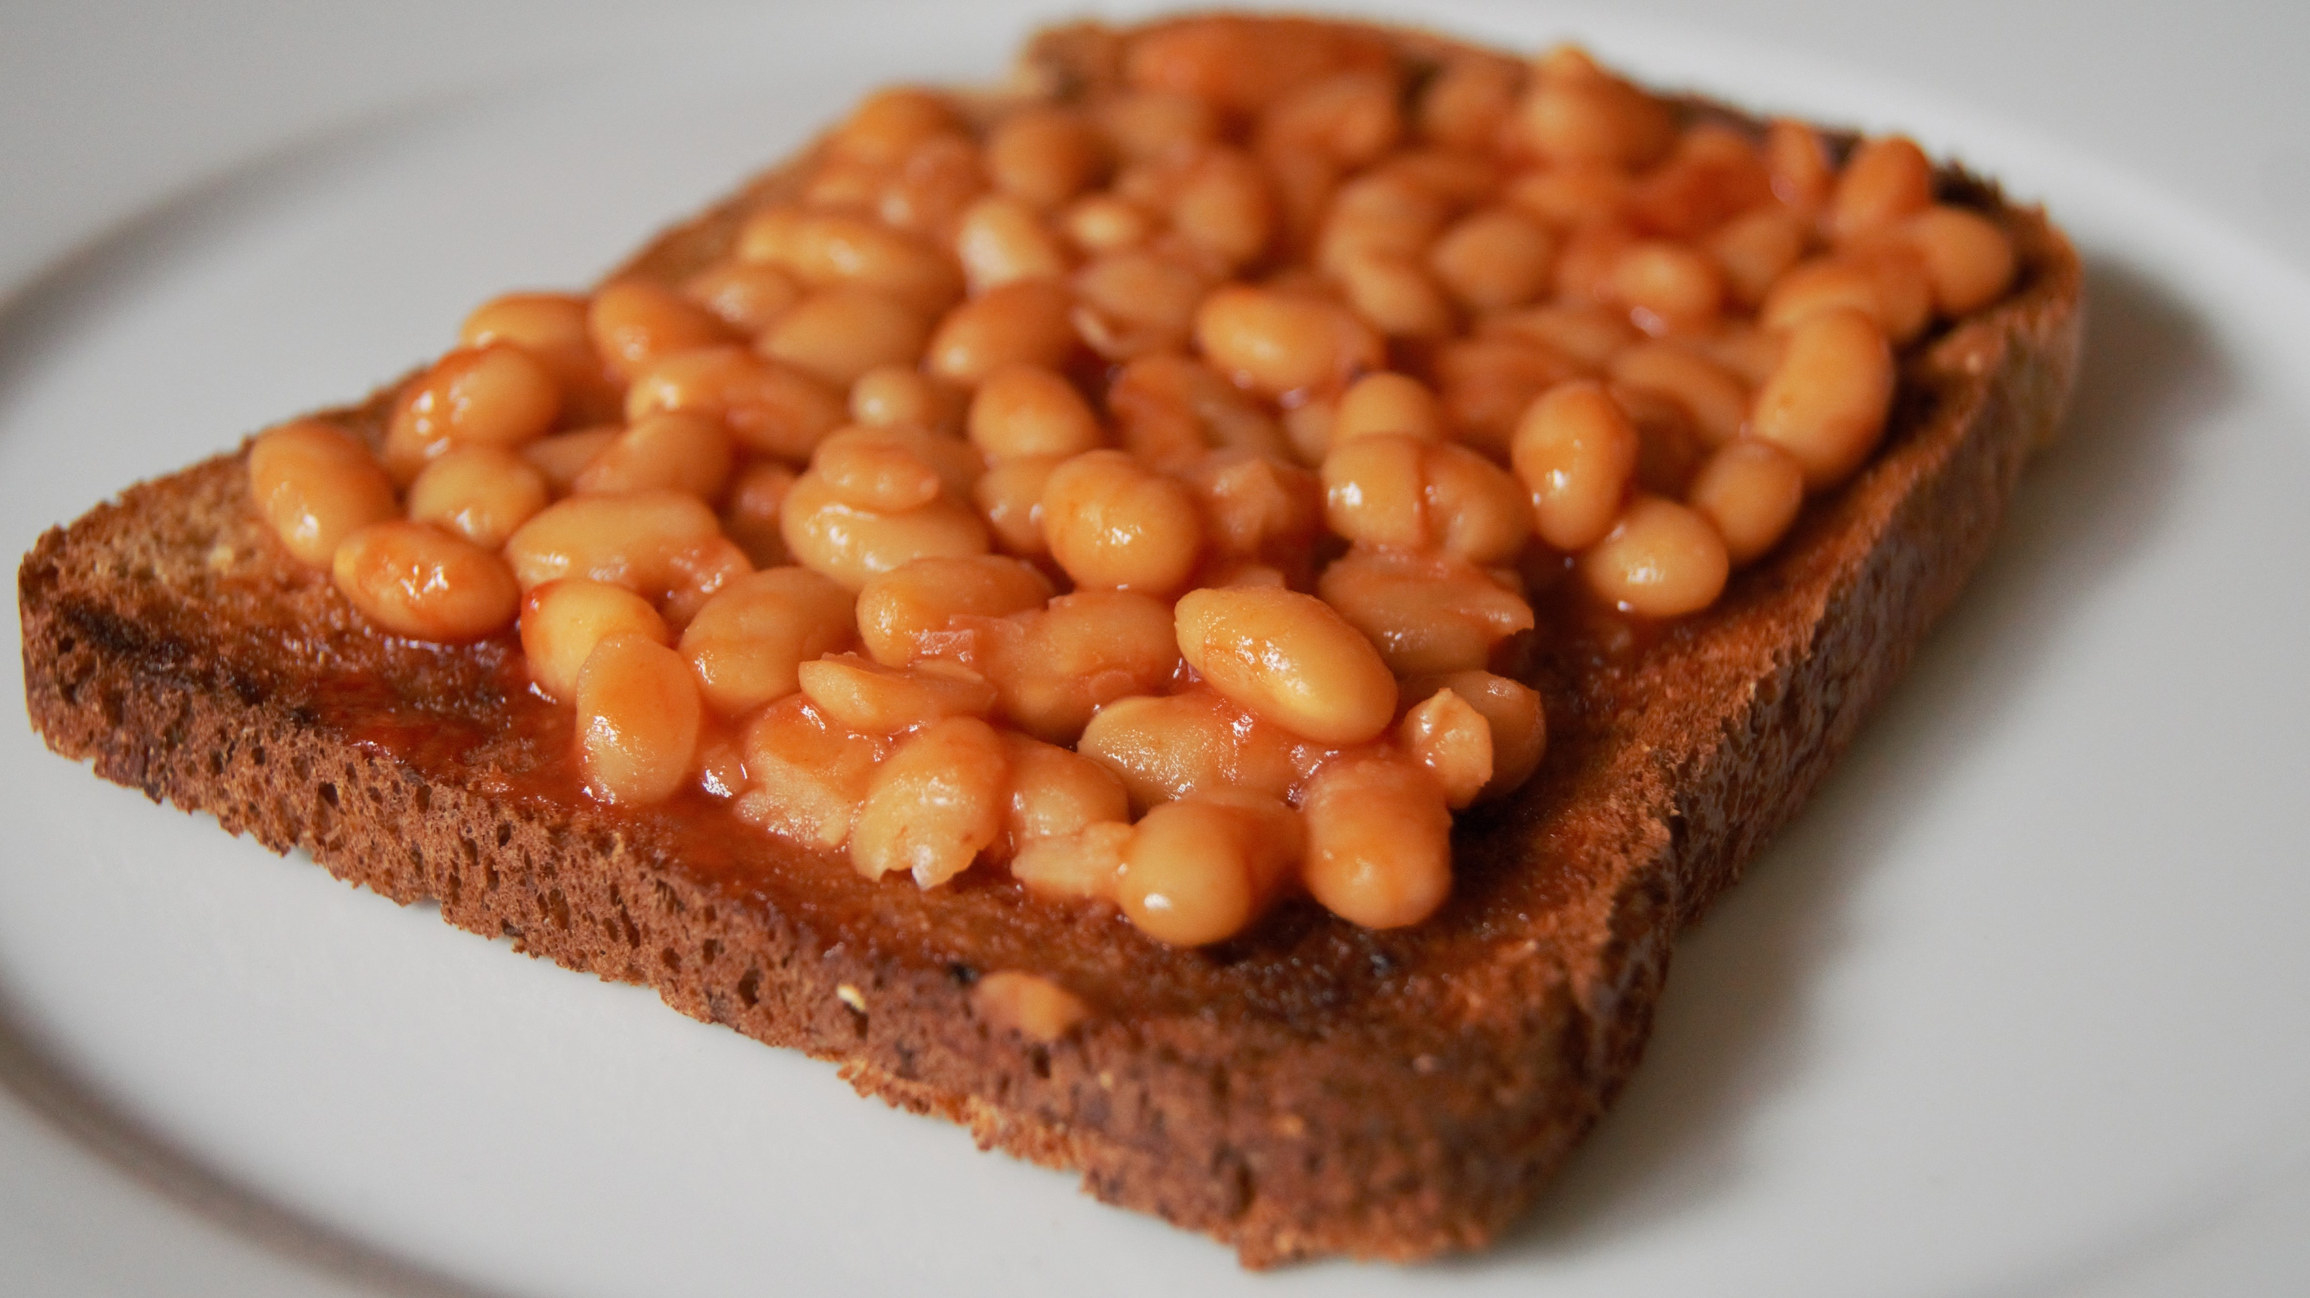 Baked beans on toast.